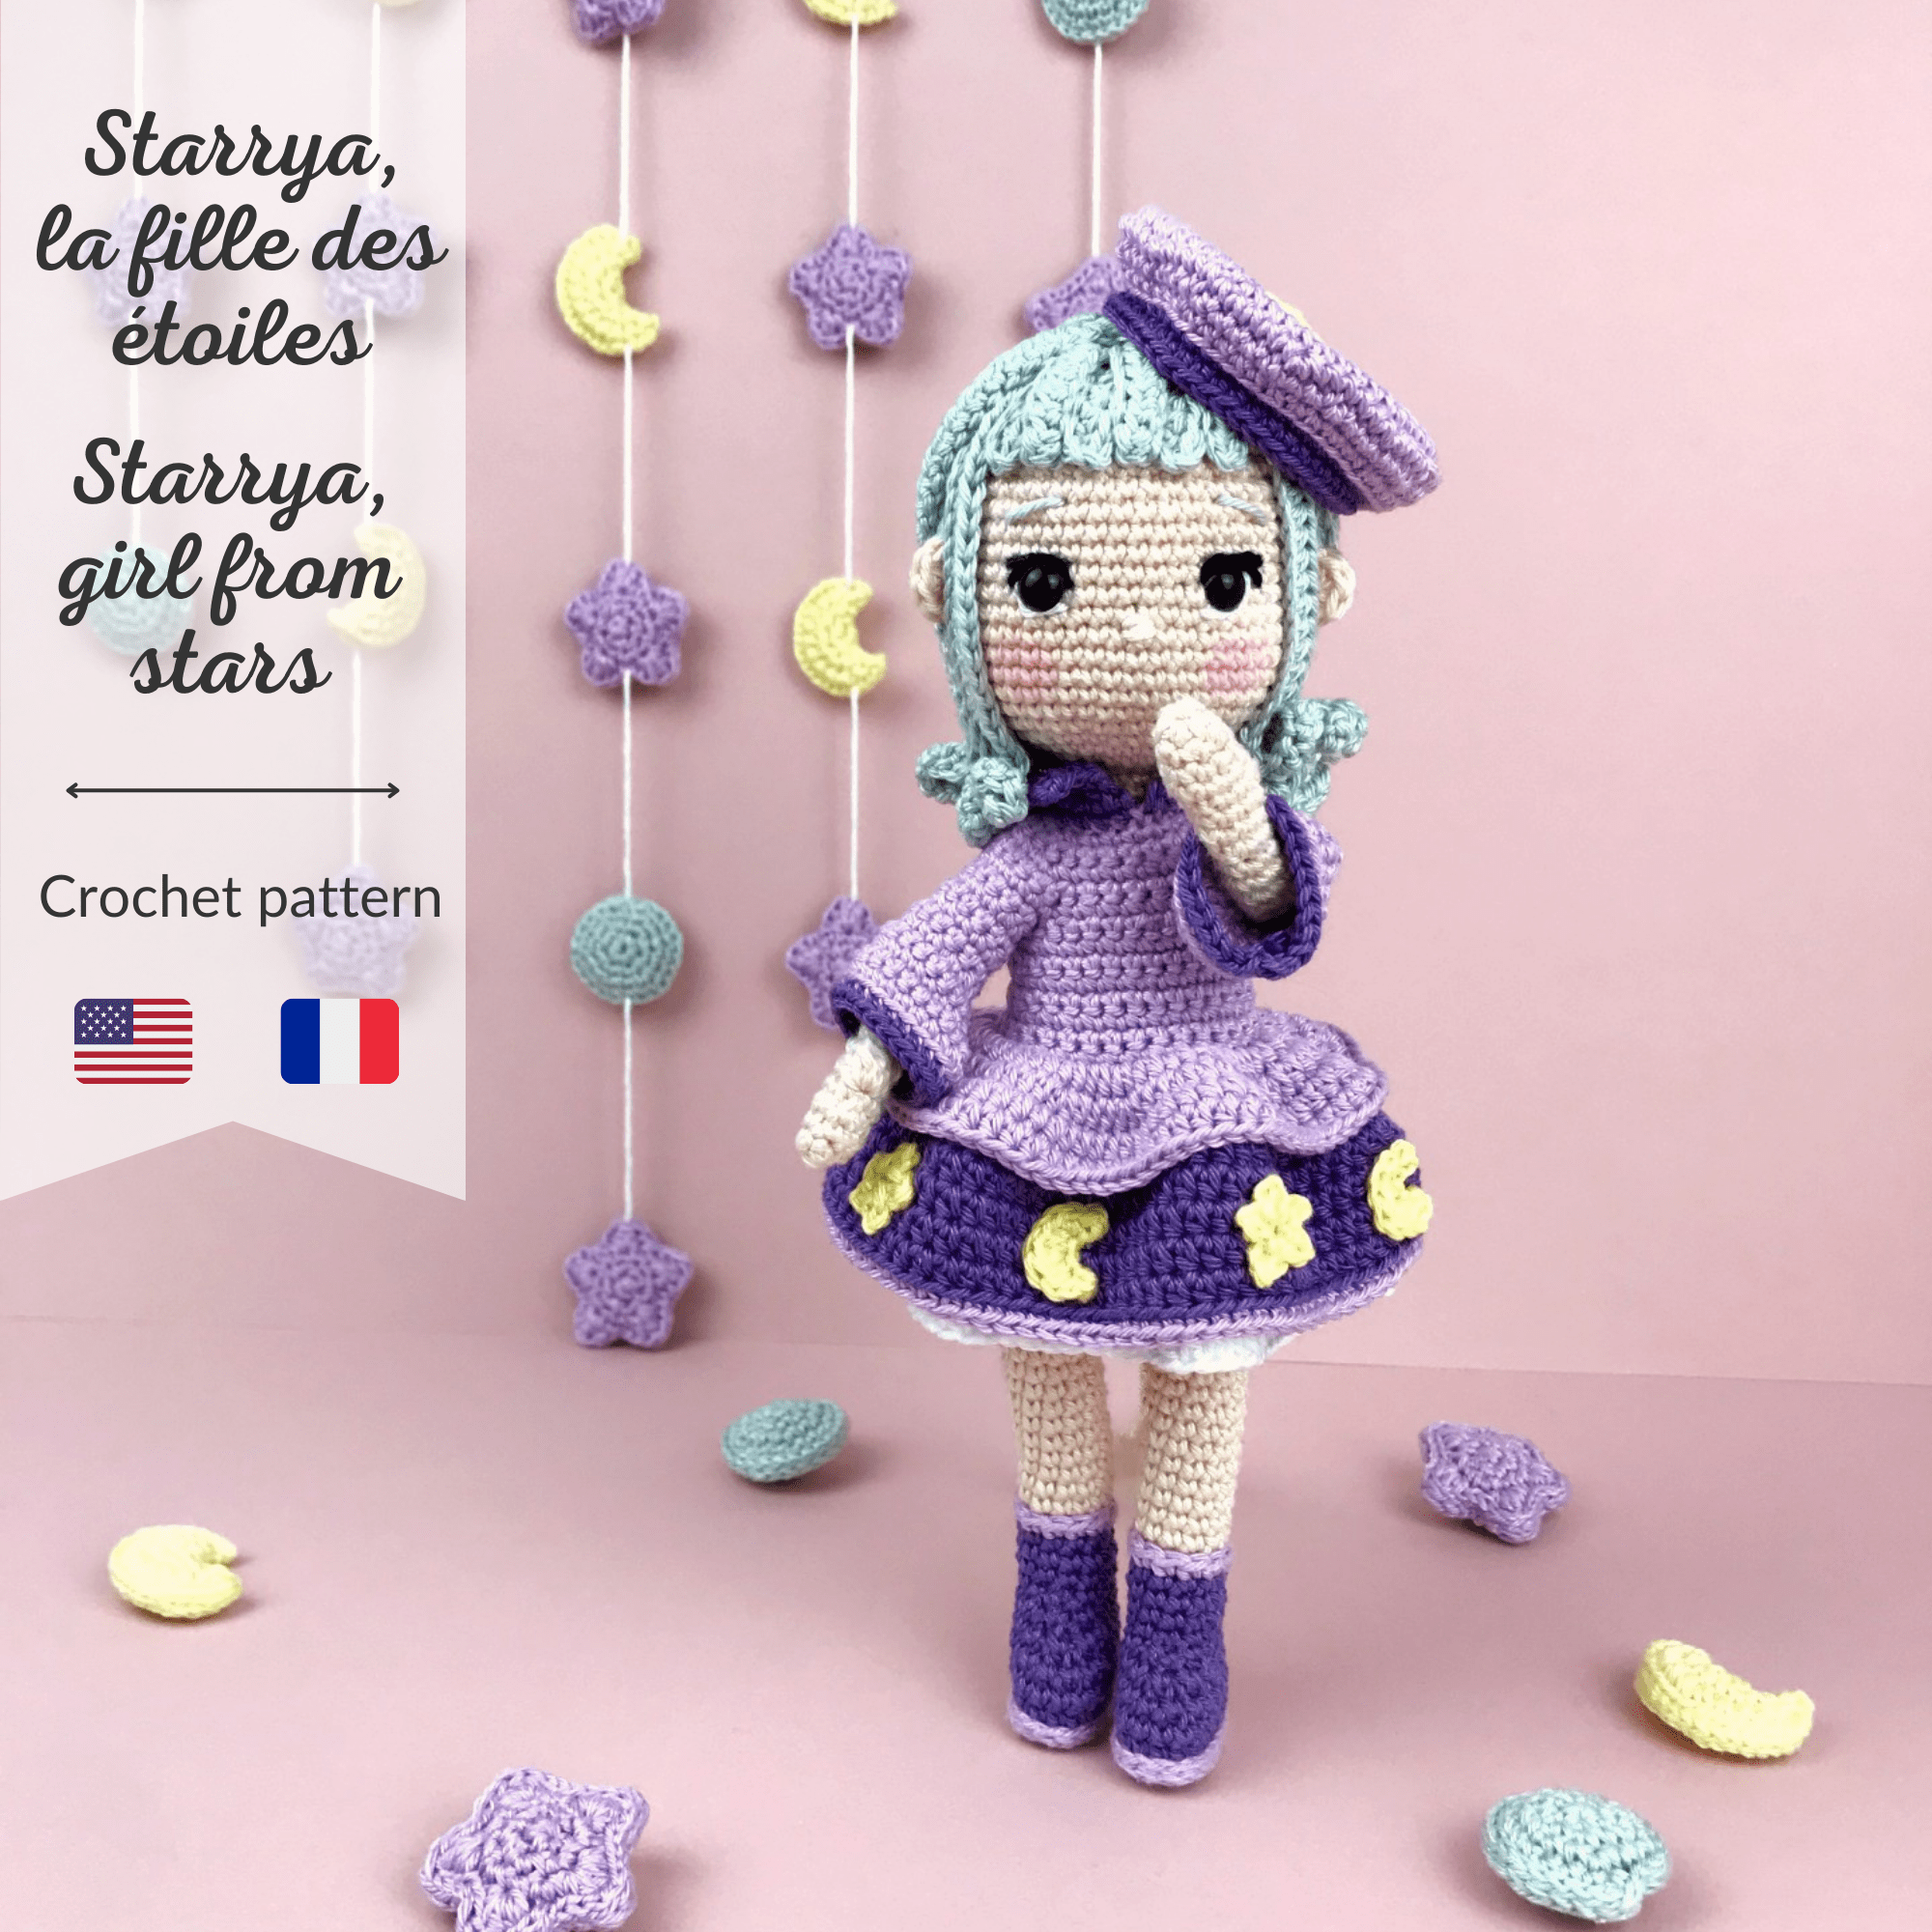 Starrya, girl from stars - Crochet Amigurumi pattern - My Rainbow